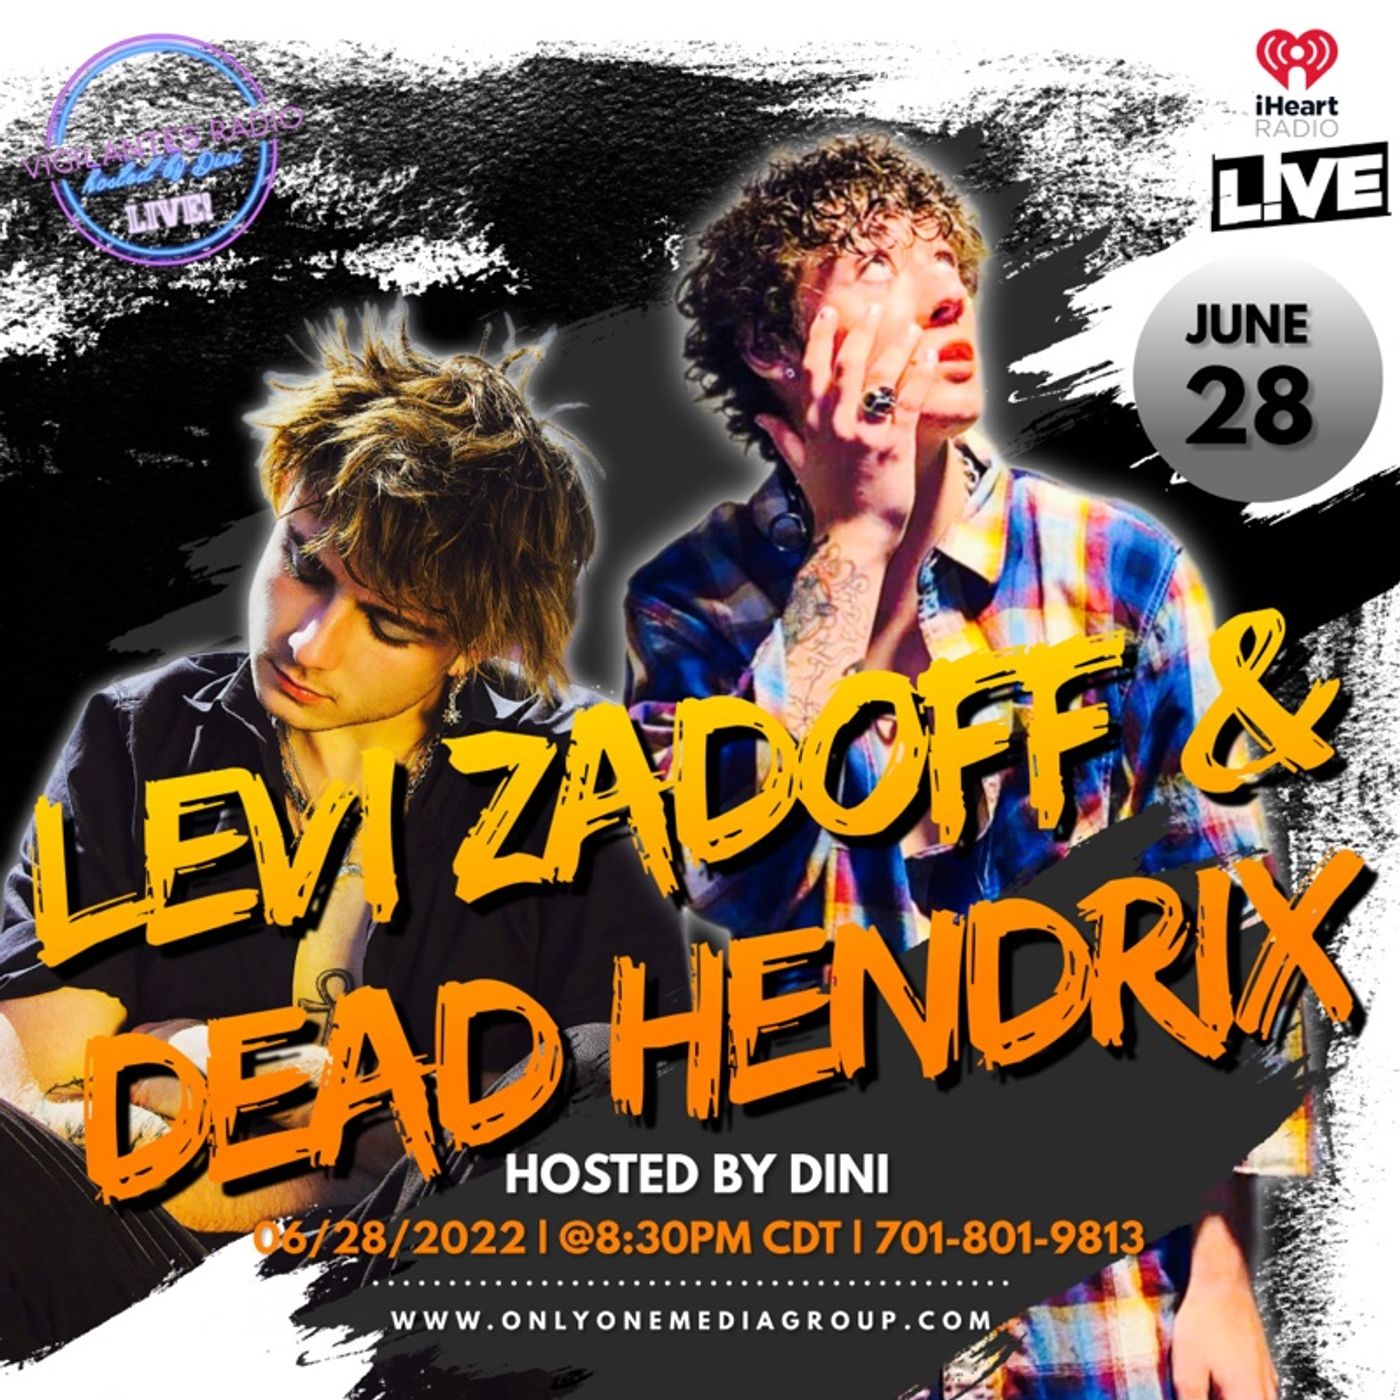 The Levi Zadoff & Dead Hendrix Interview. Image